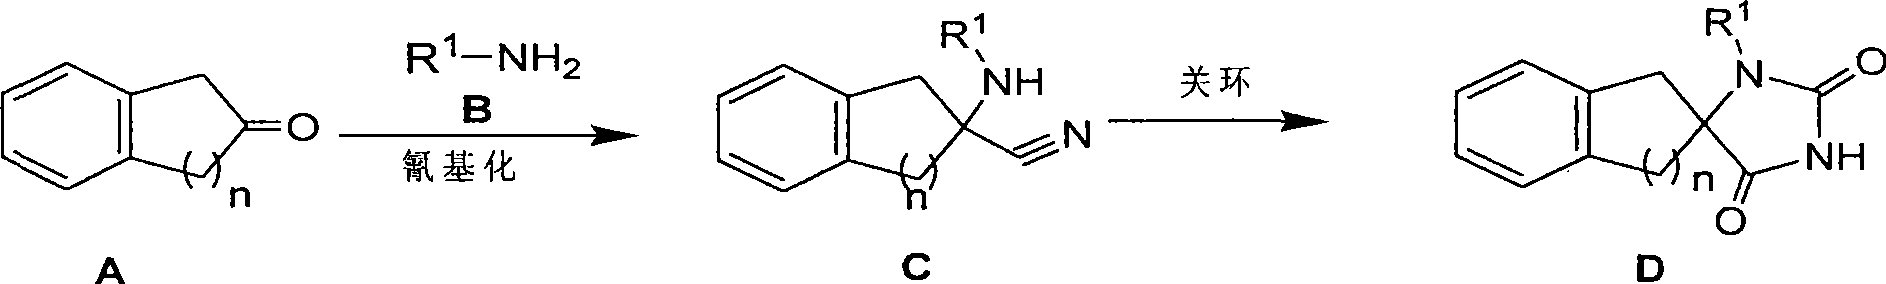 Synthetic method for aromatic ring bisamide spiro drug template